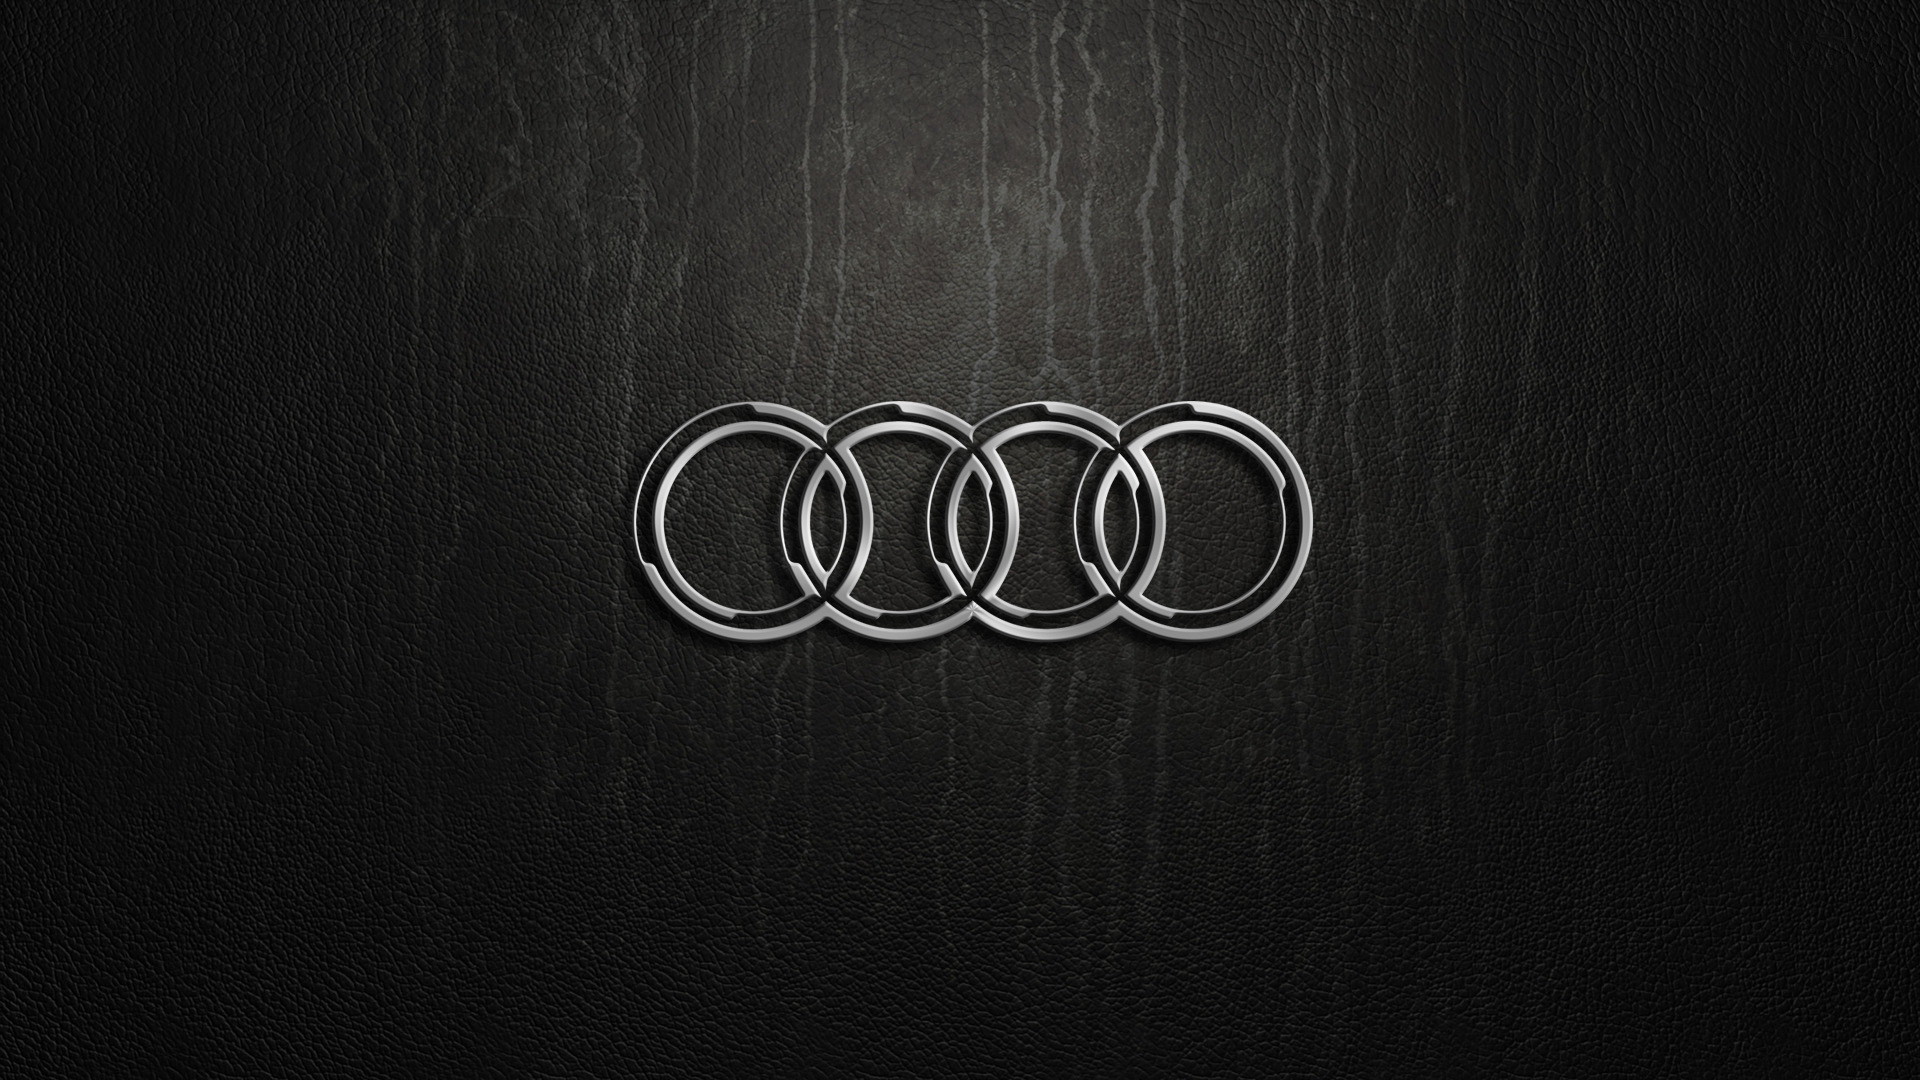 1920x1080 Audi Logo Wallpaper For Iphone